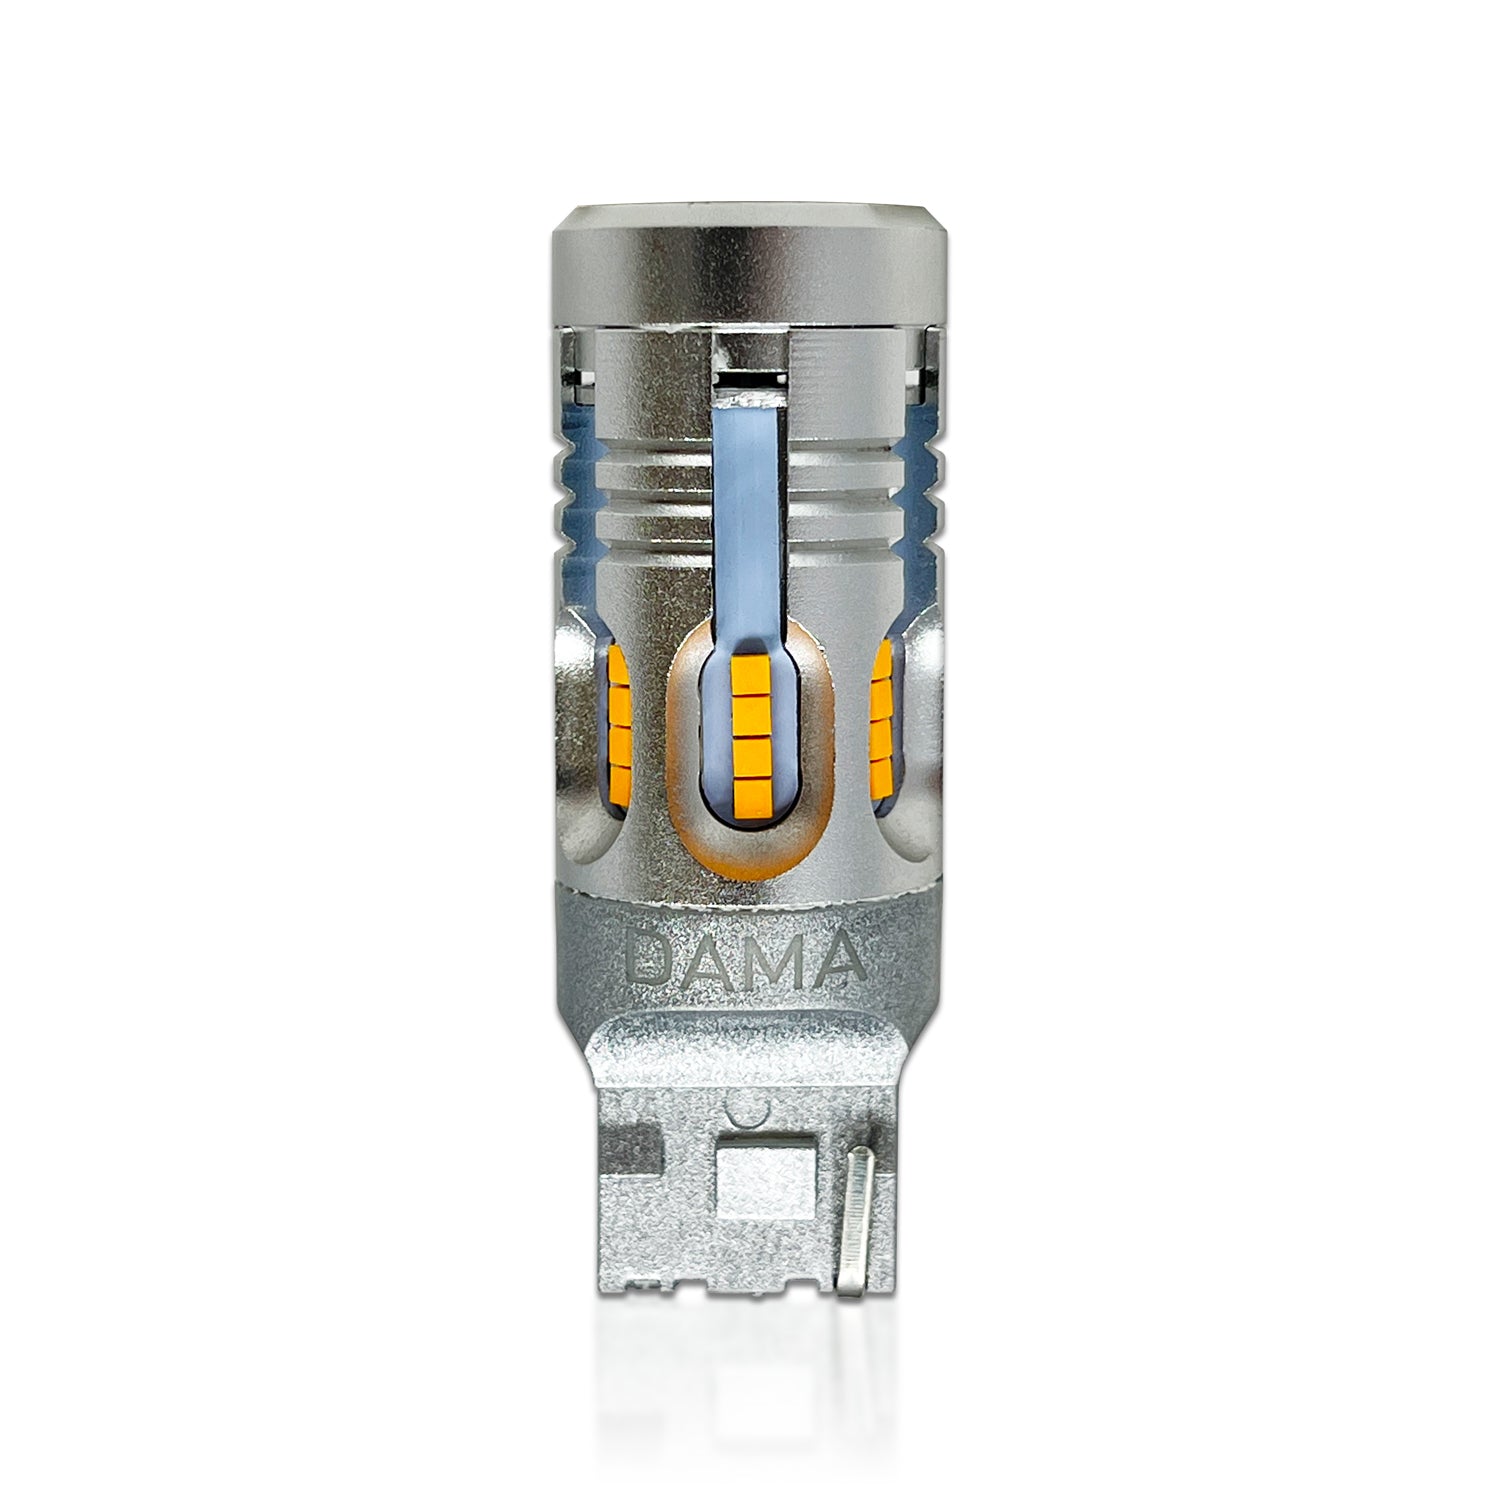 7440: Dama Mini White Amber LED Bulbs w/ Canbus 24CSP White